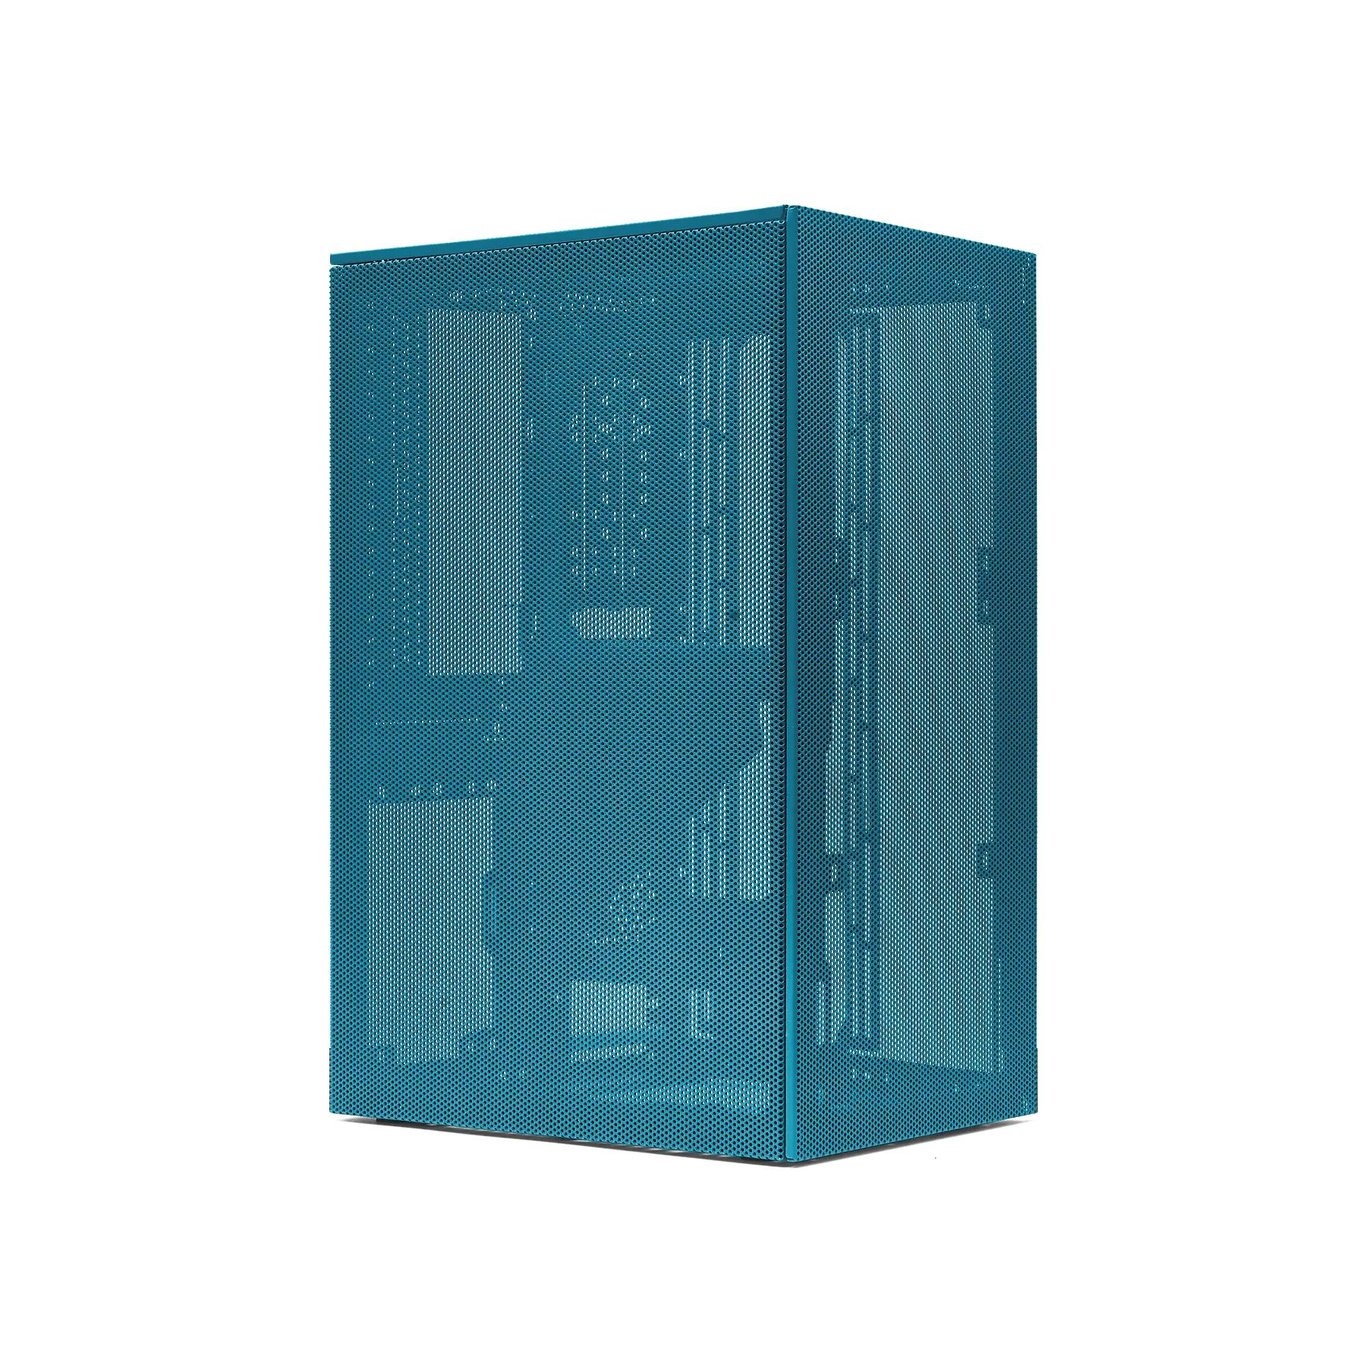 SSUPD Meshroom S Full Mesh Mini-ITX 機箱 (w/ PCIe 4.0 Riser Cable) - Peacock blue 藍色